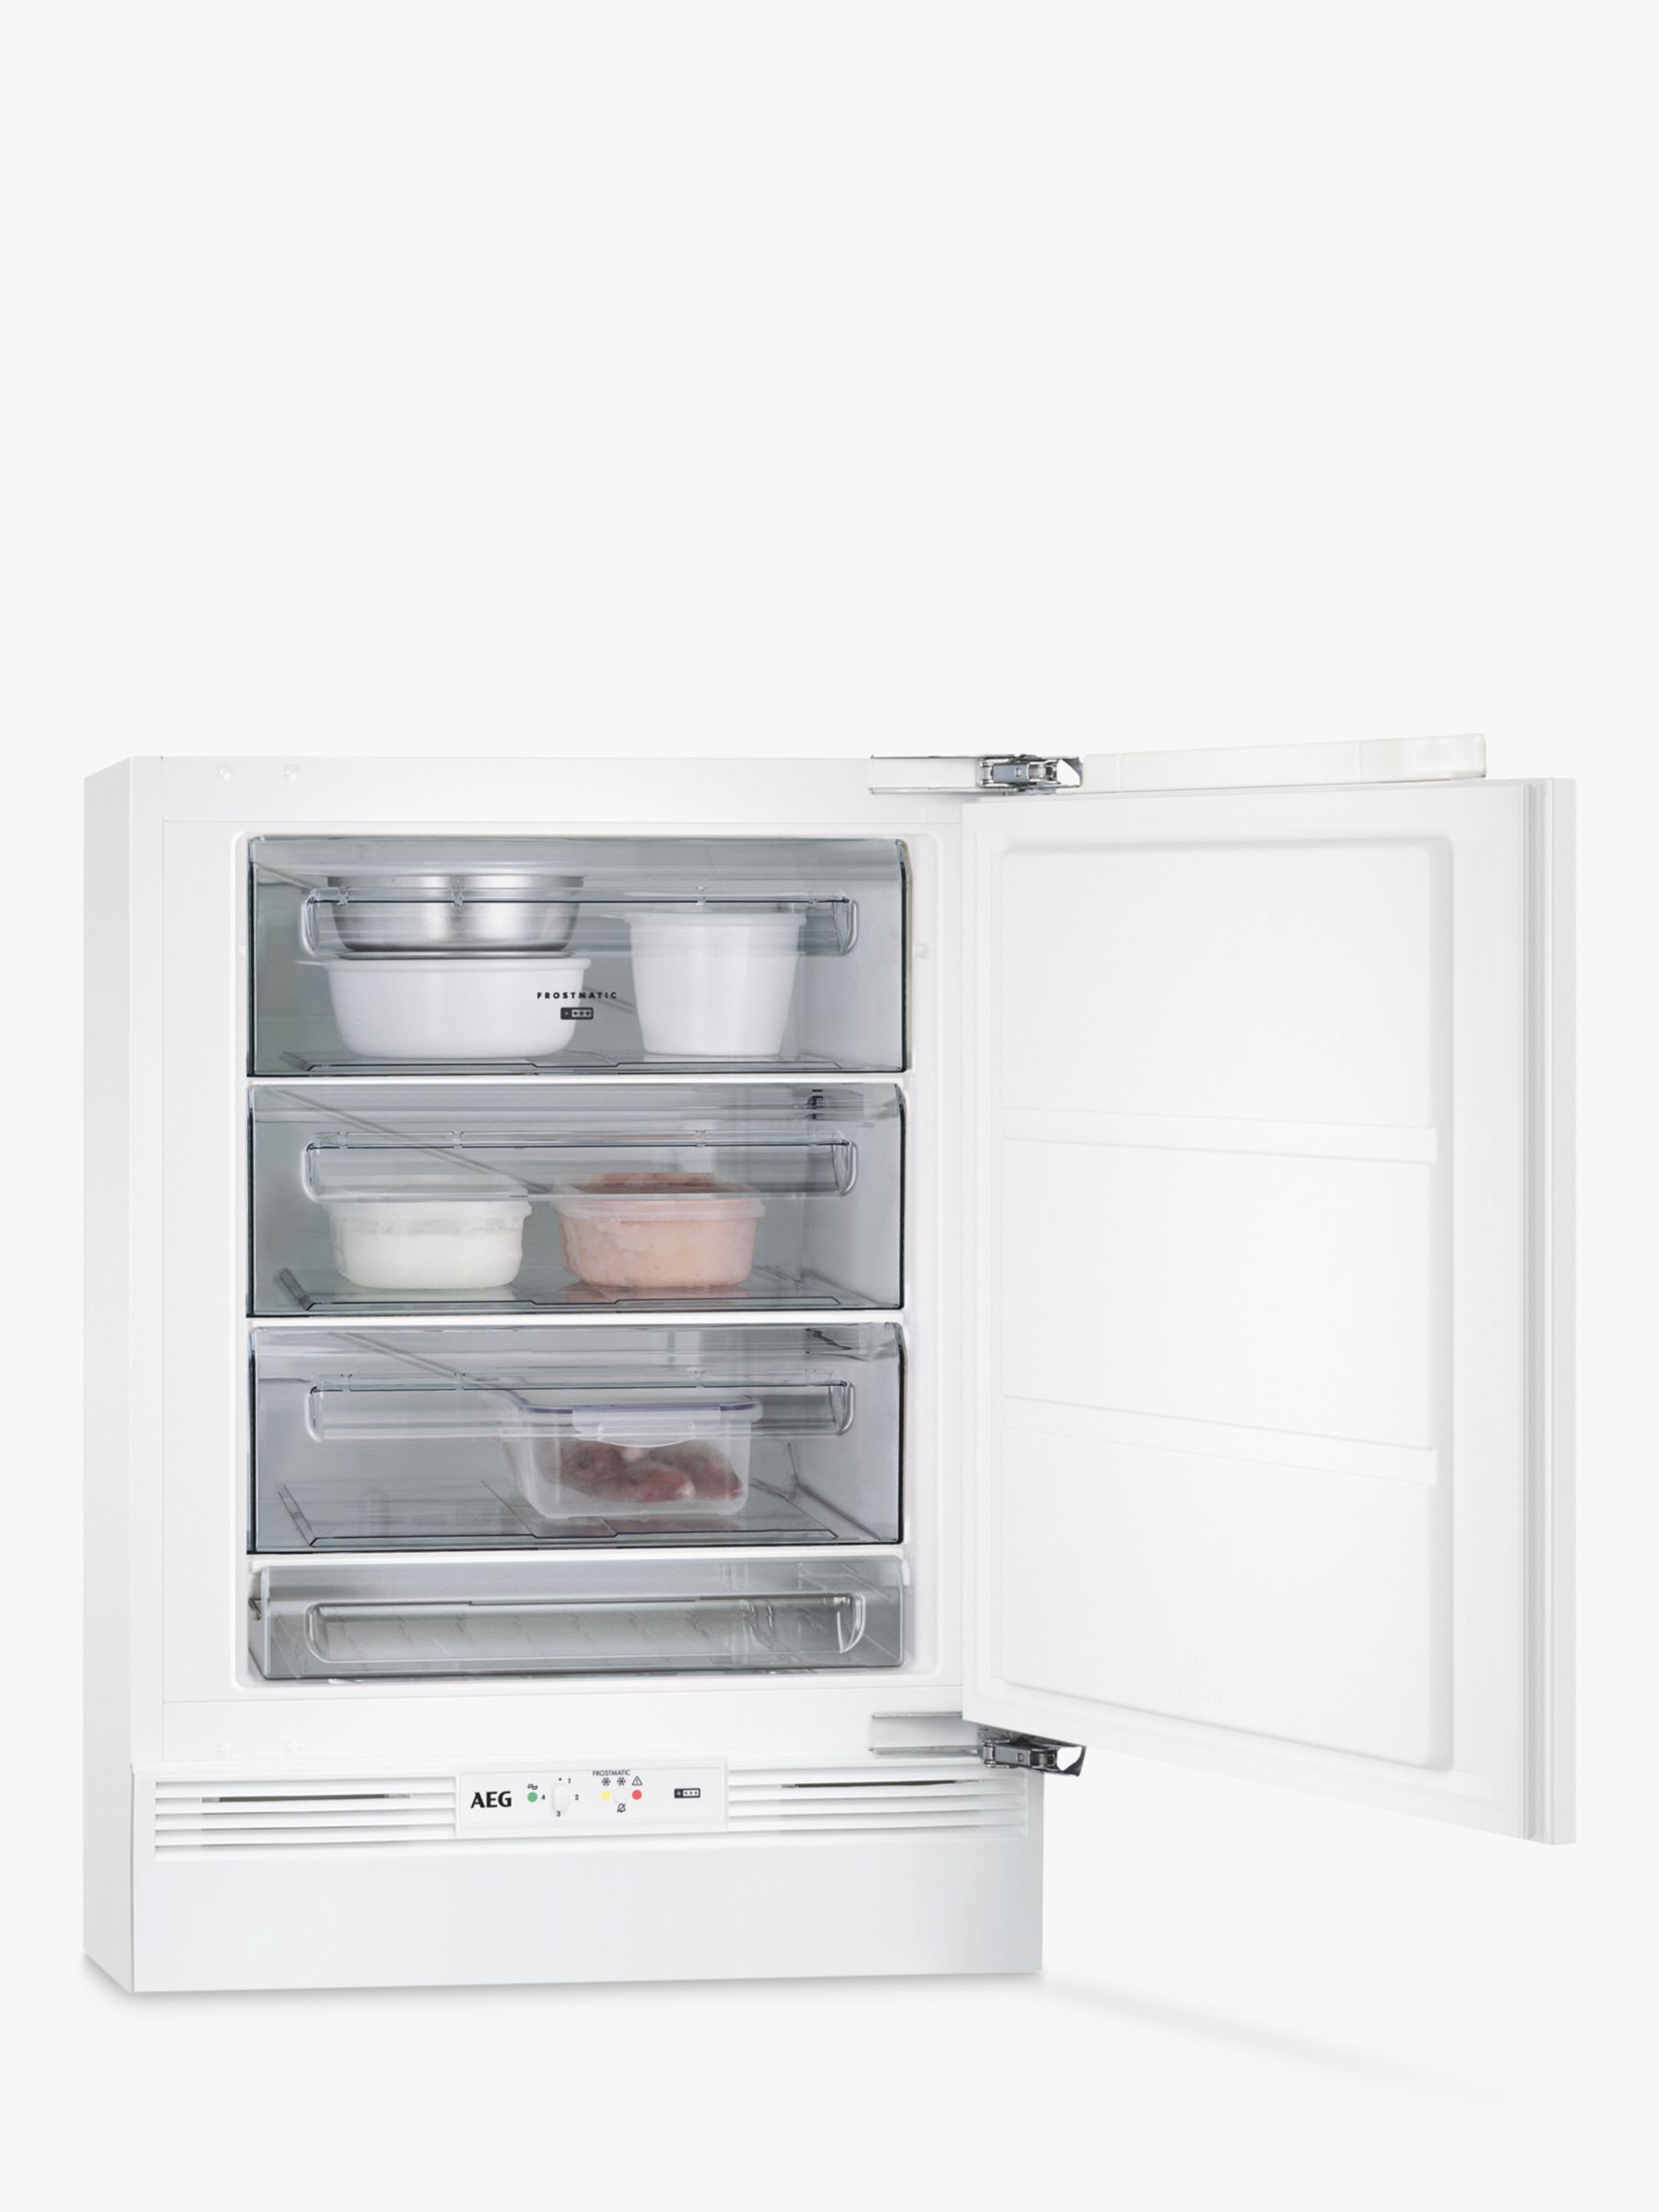 AEG ABB6821VAF Built-Under Freezer, A+ Energy Rating, 60cm Wide, White